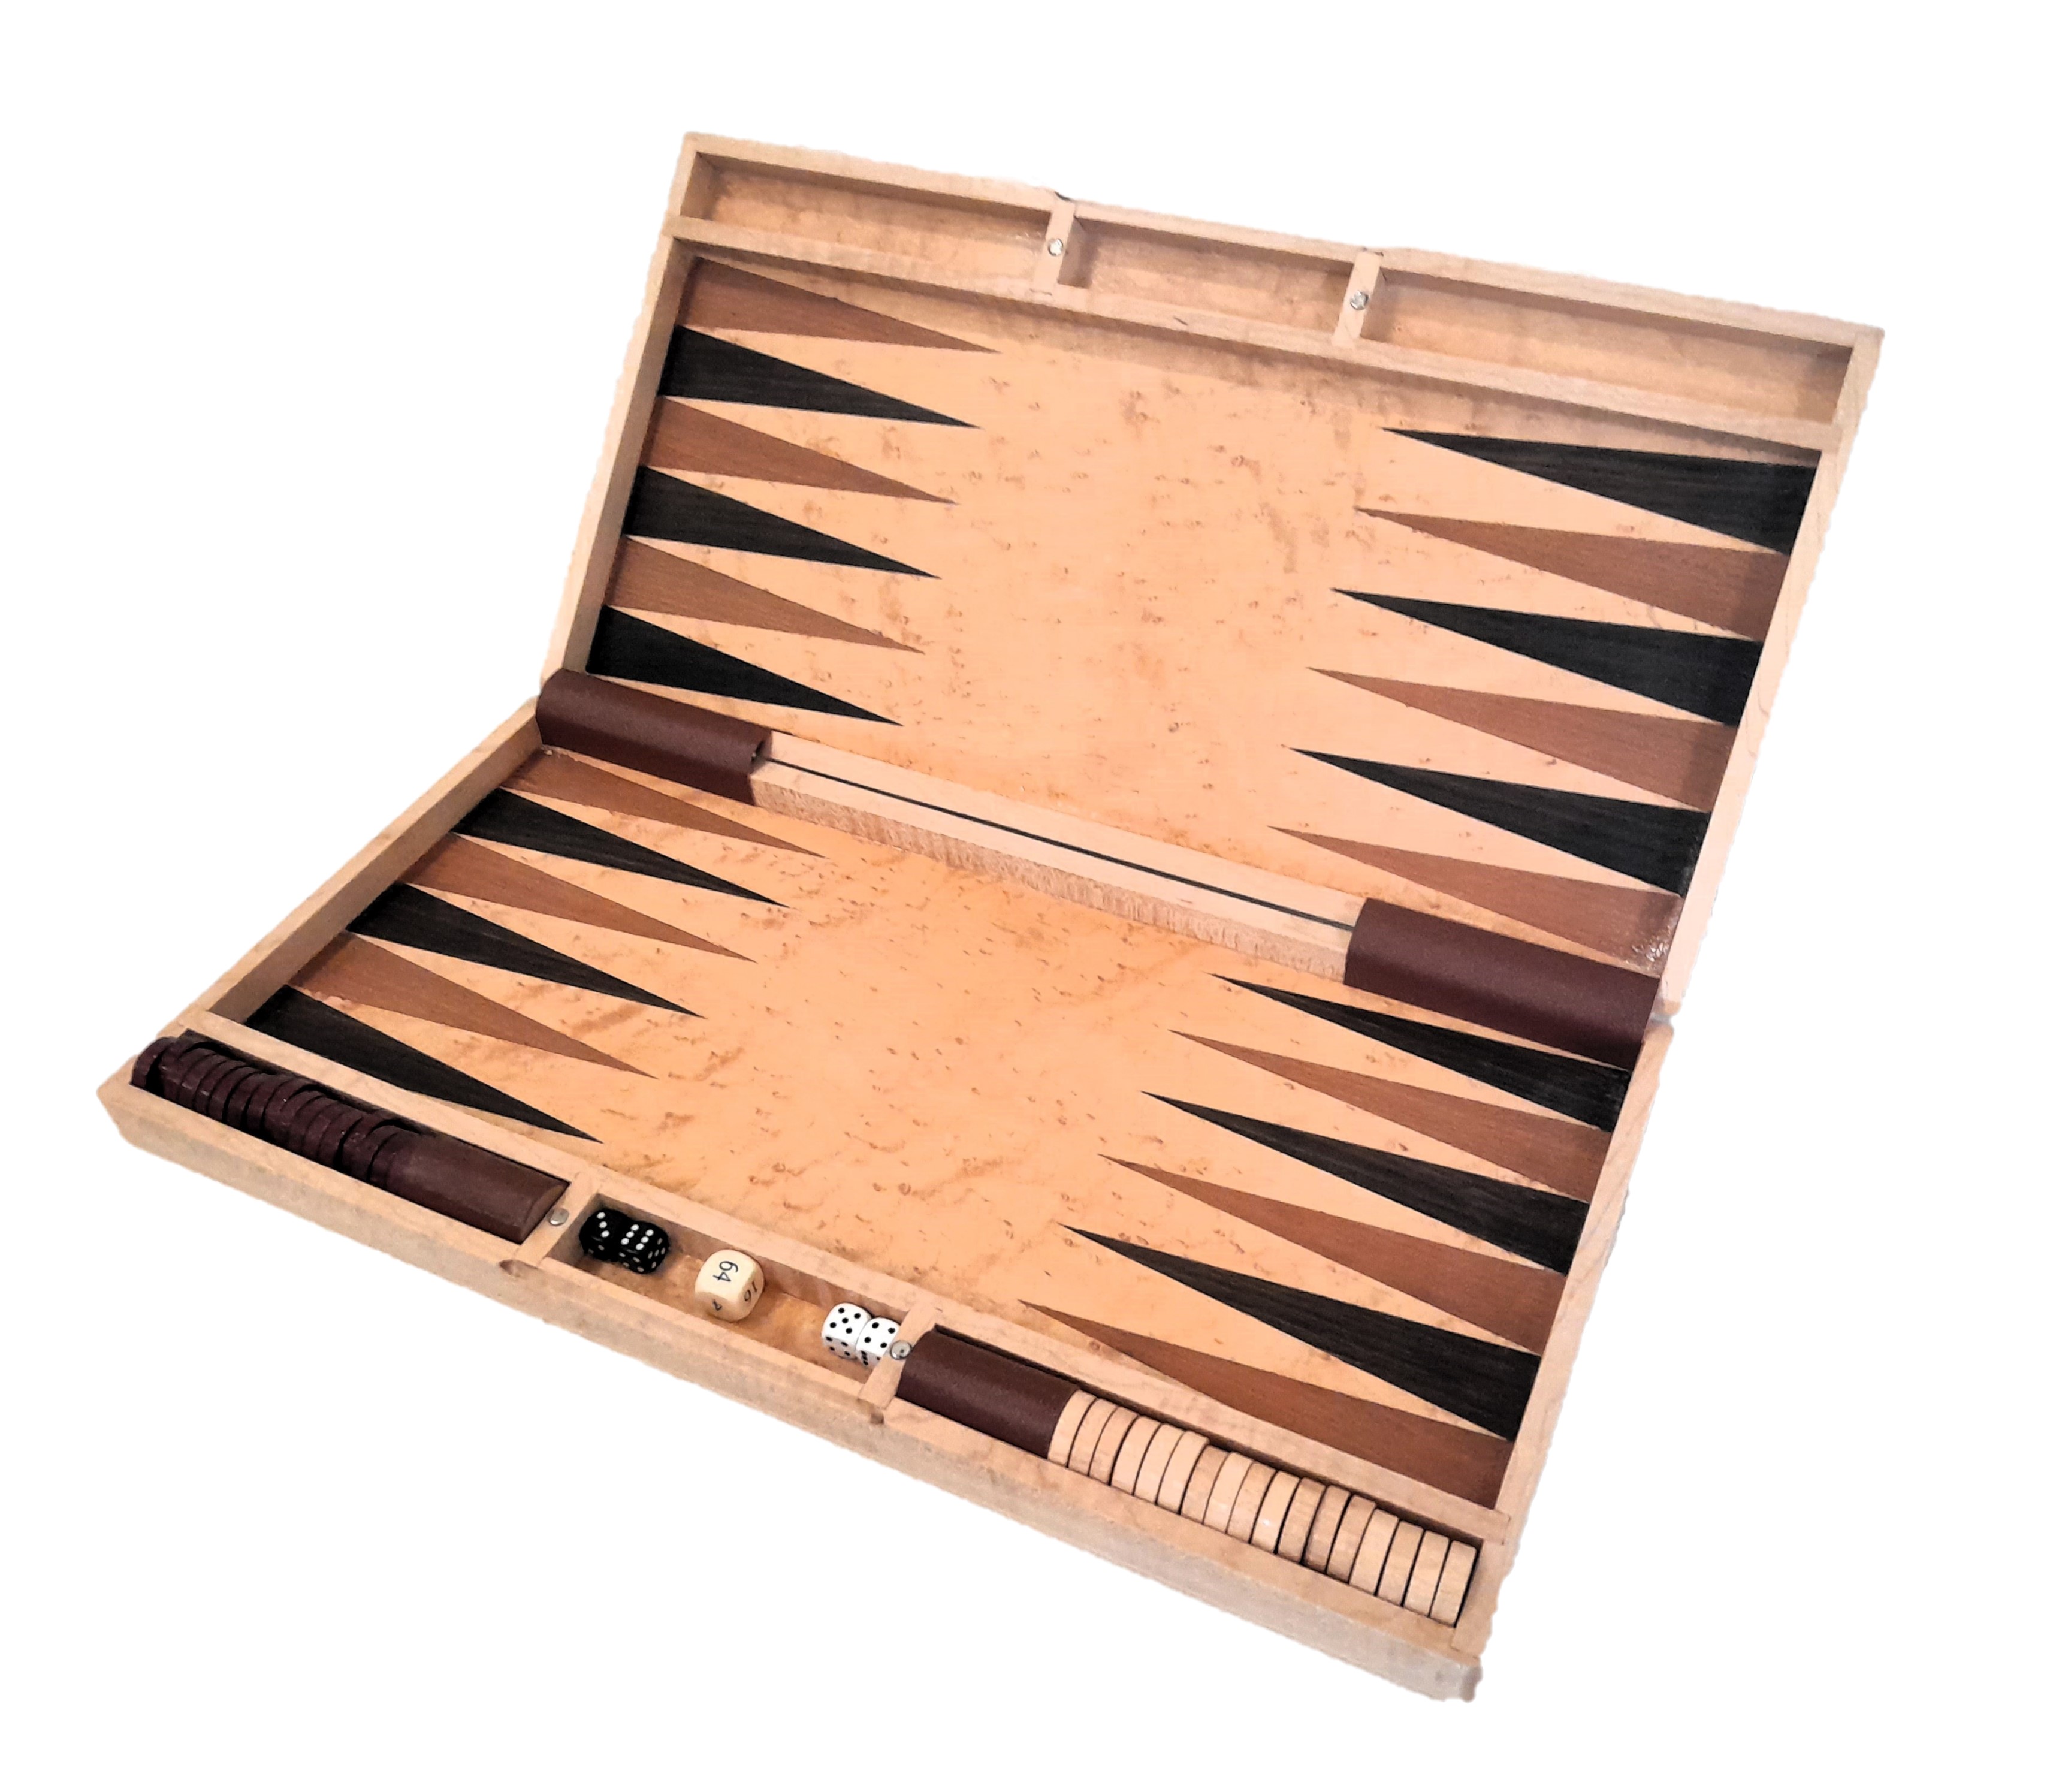 Backgammon Board 1665 - Click for details